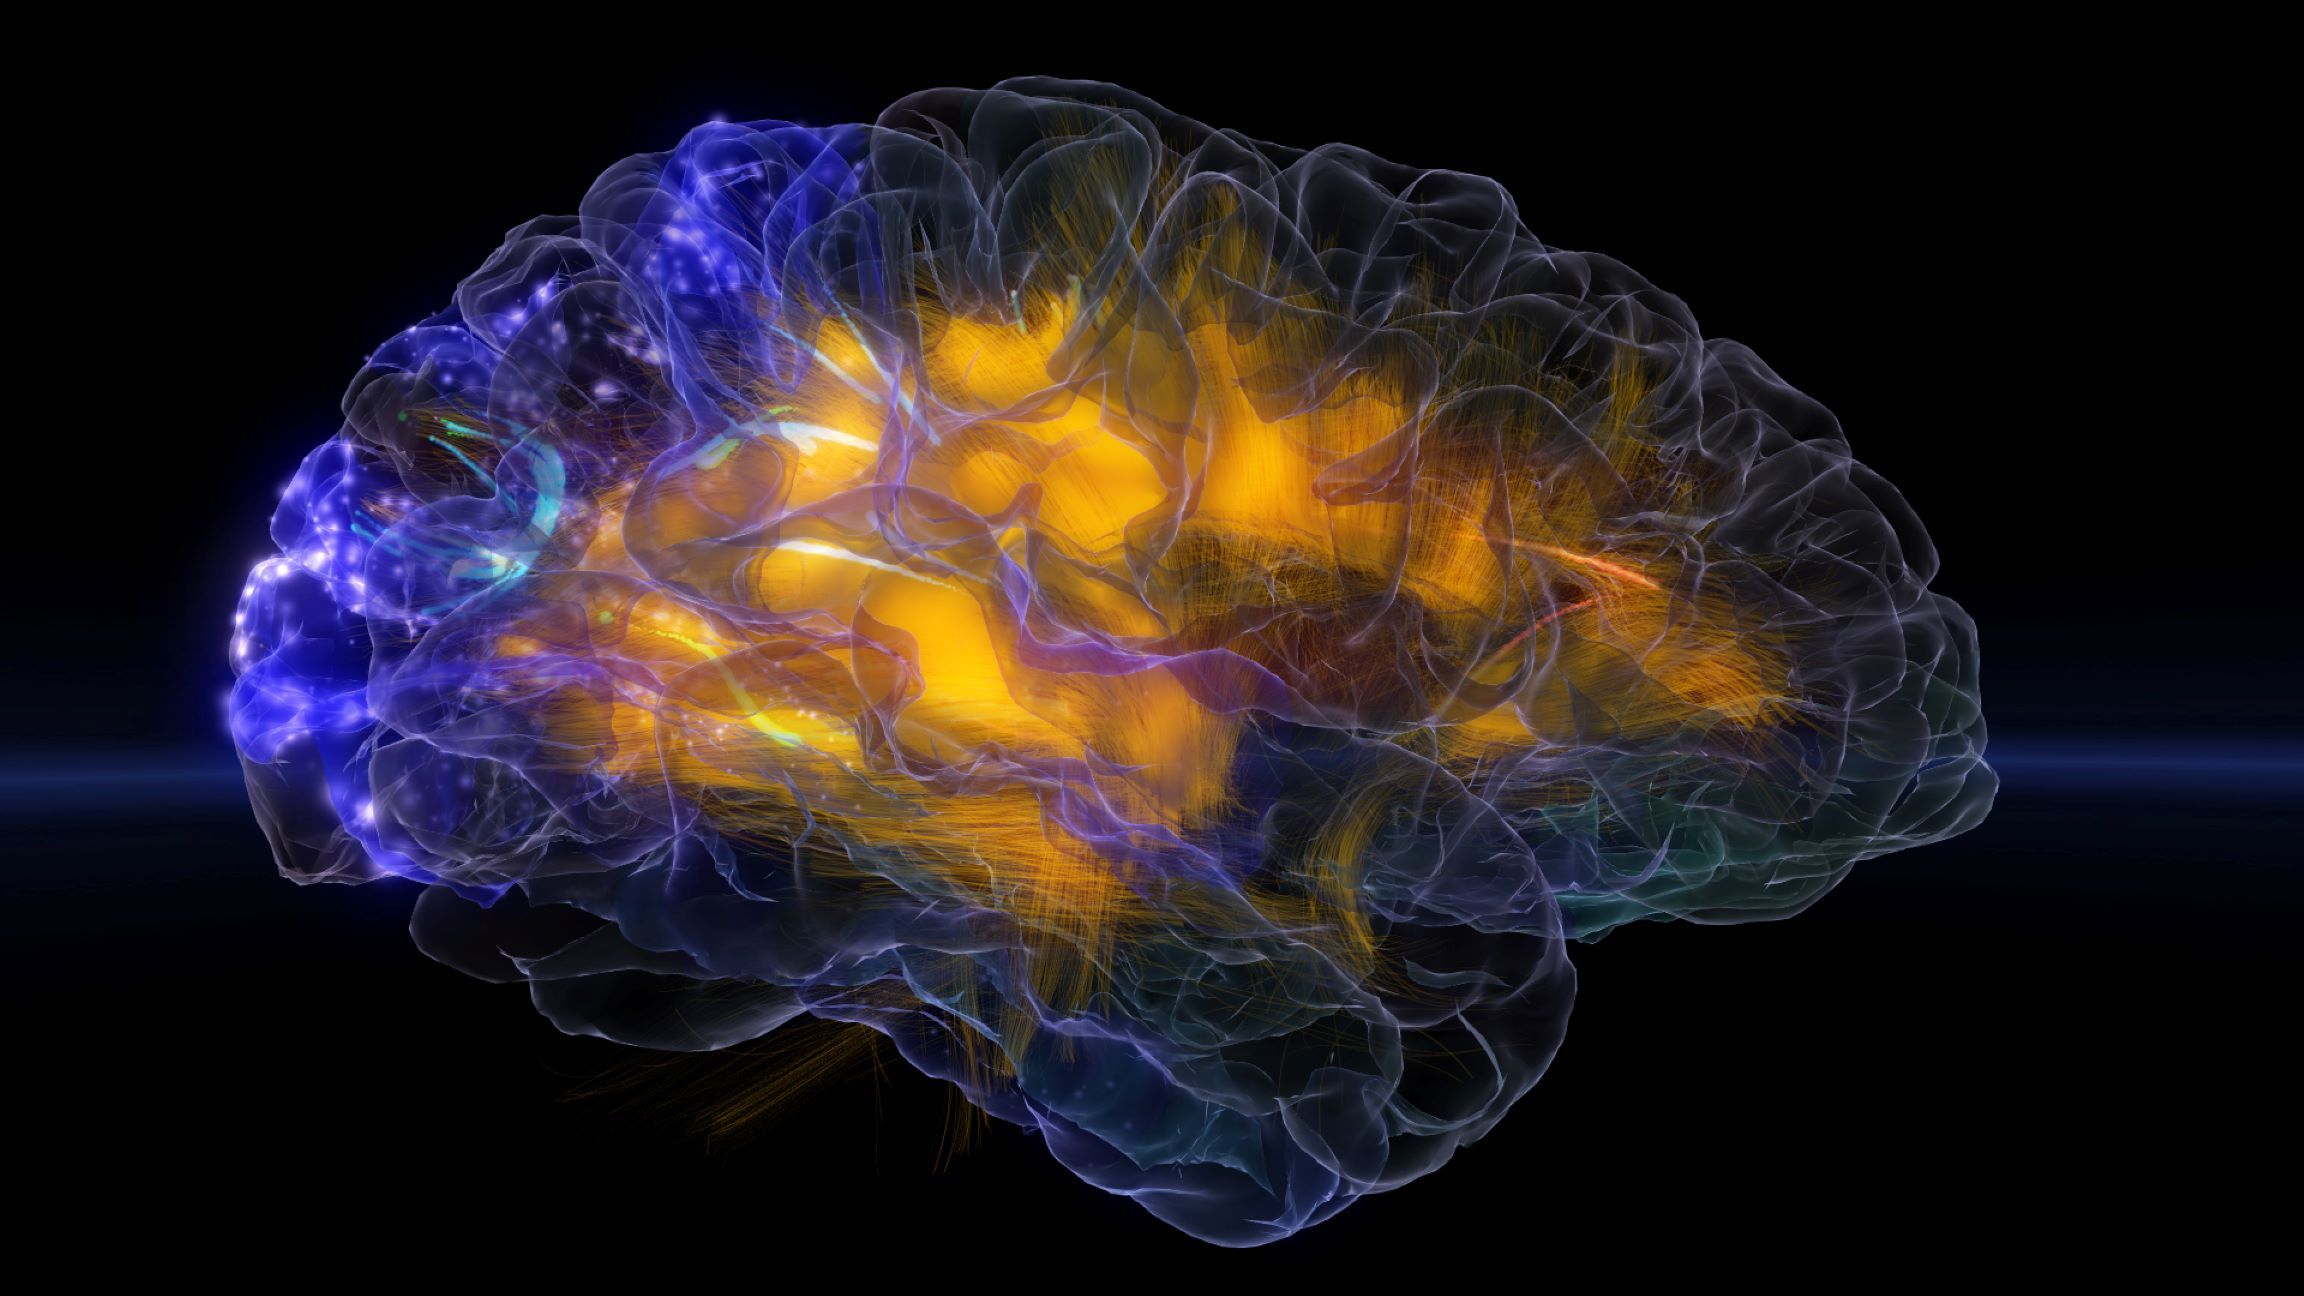 Sci-fi Illustration of a Human Brain